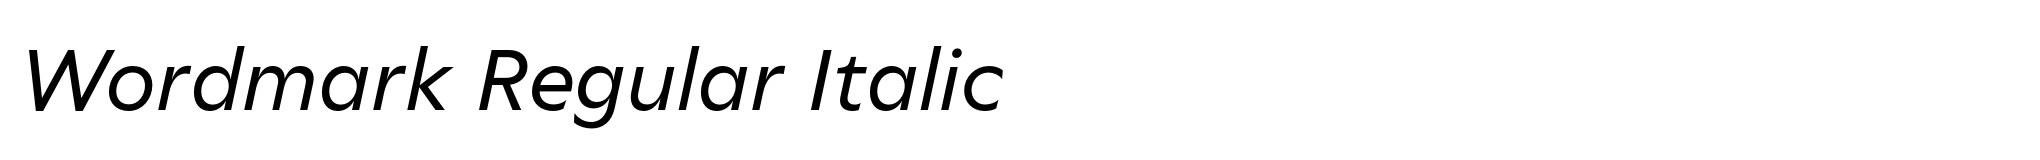 Wordmark Regular Italic image